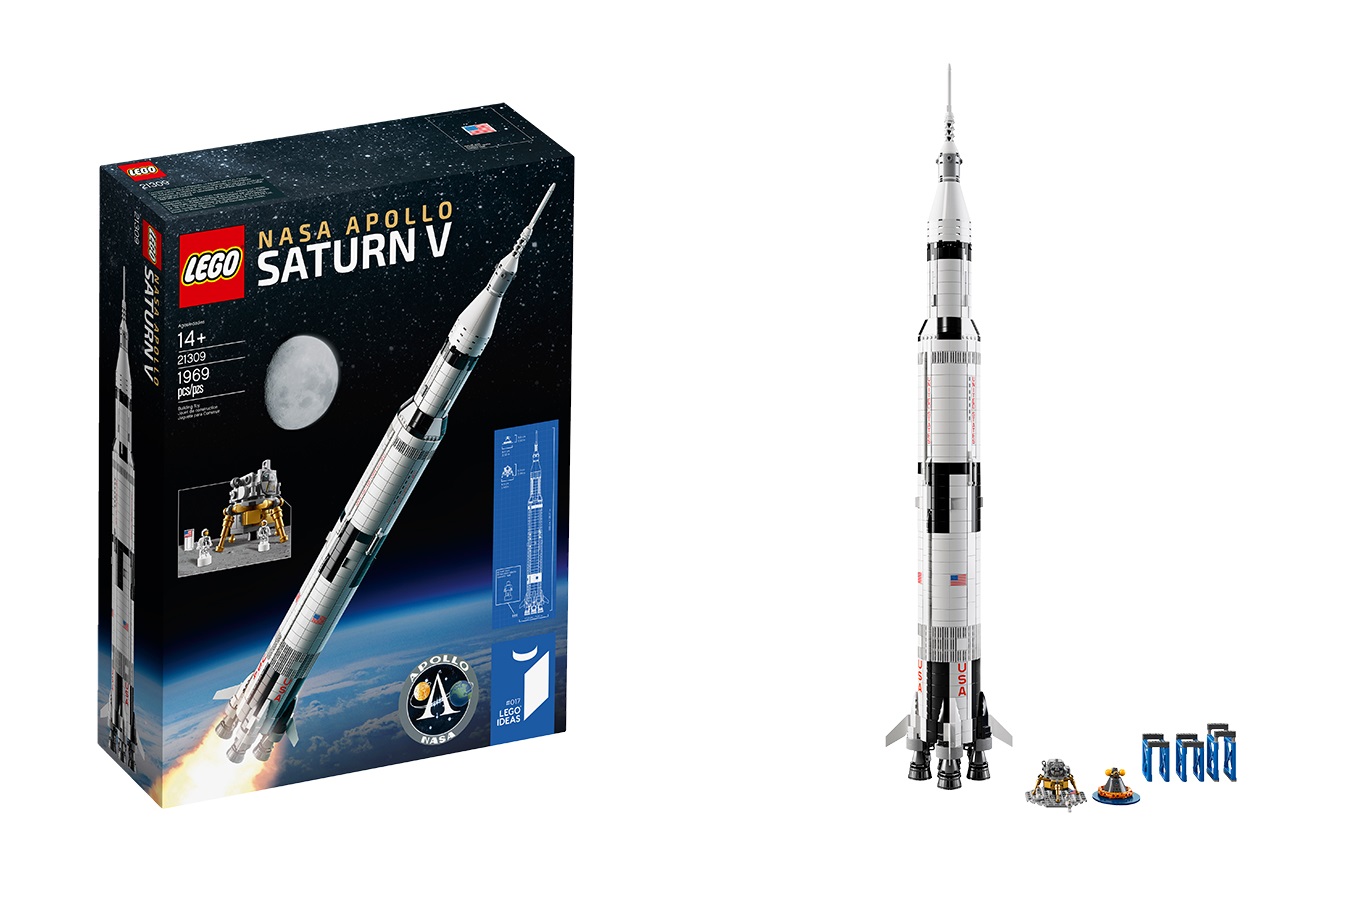 Blast off with LEGO Ideas 21309 NASA Apollo Saturn V!